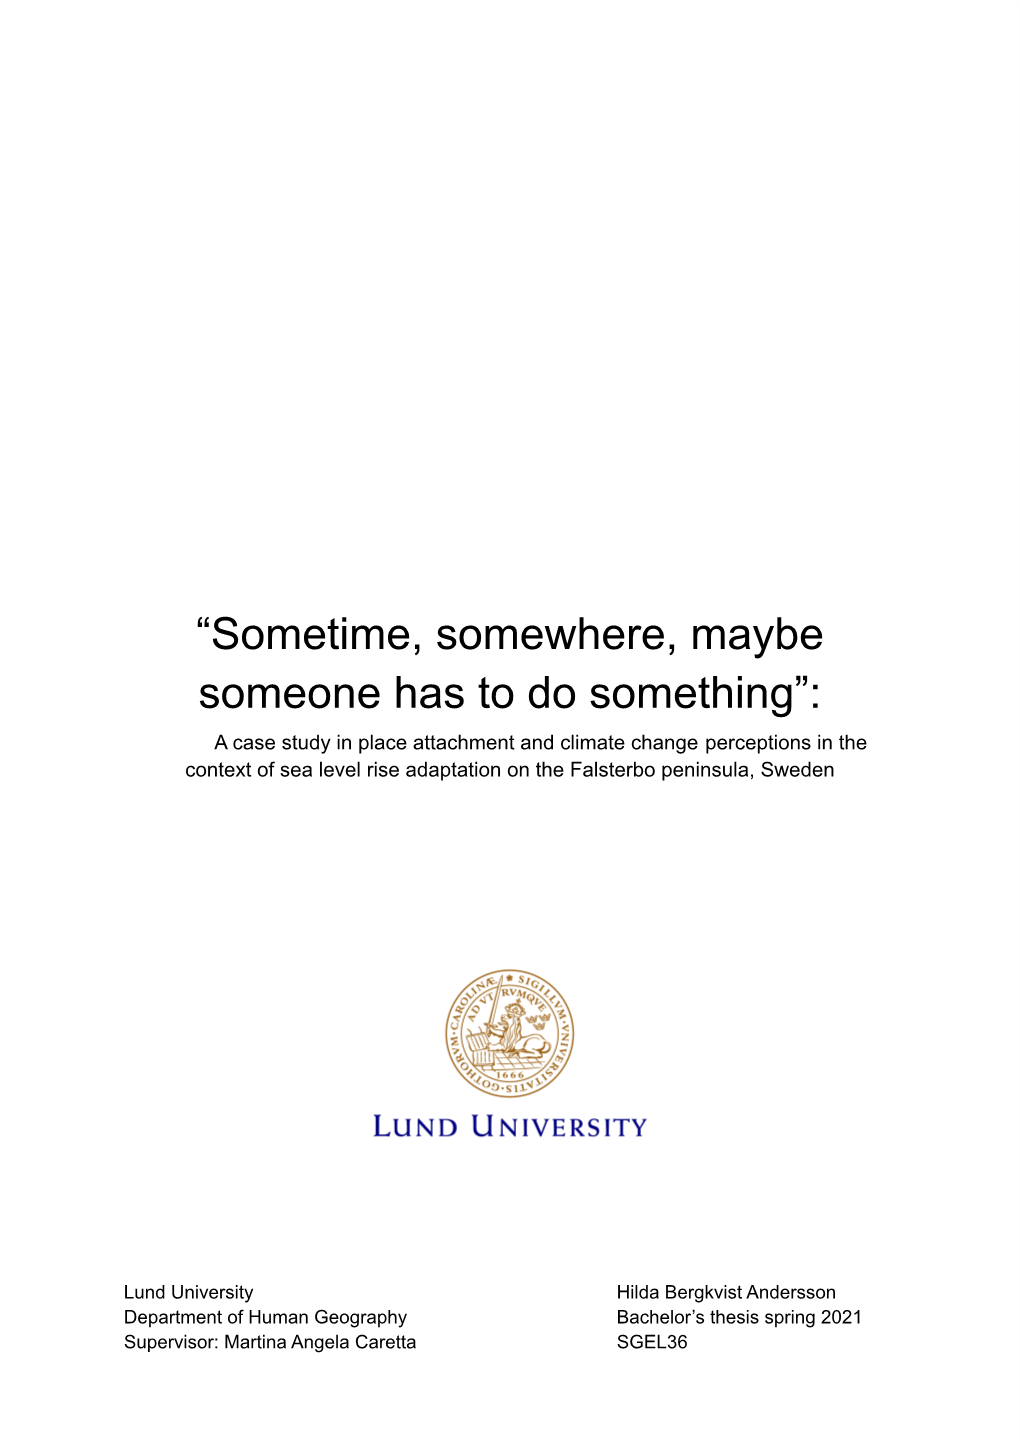 Hilda SGEL36: “Sometime, Somewhere, Maybe Someone Has to Do Something”